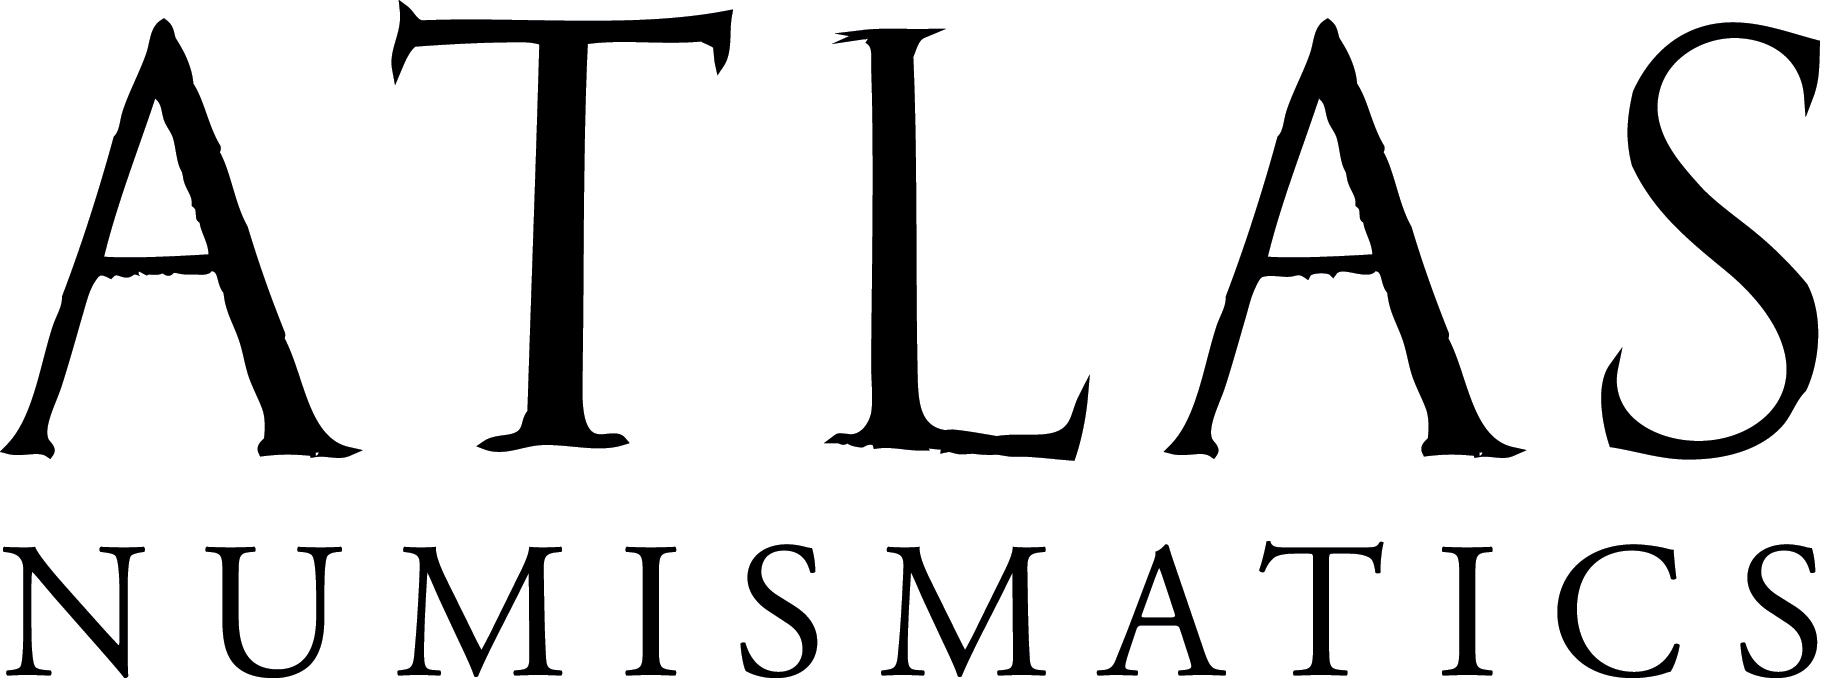 atlas numismatics gold ira review logo